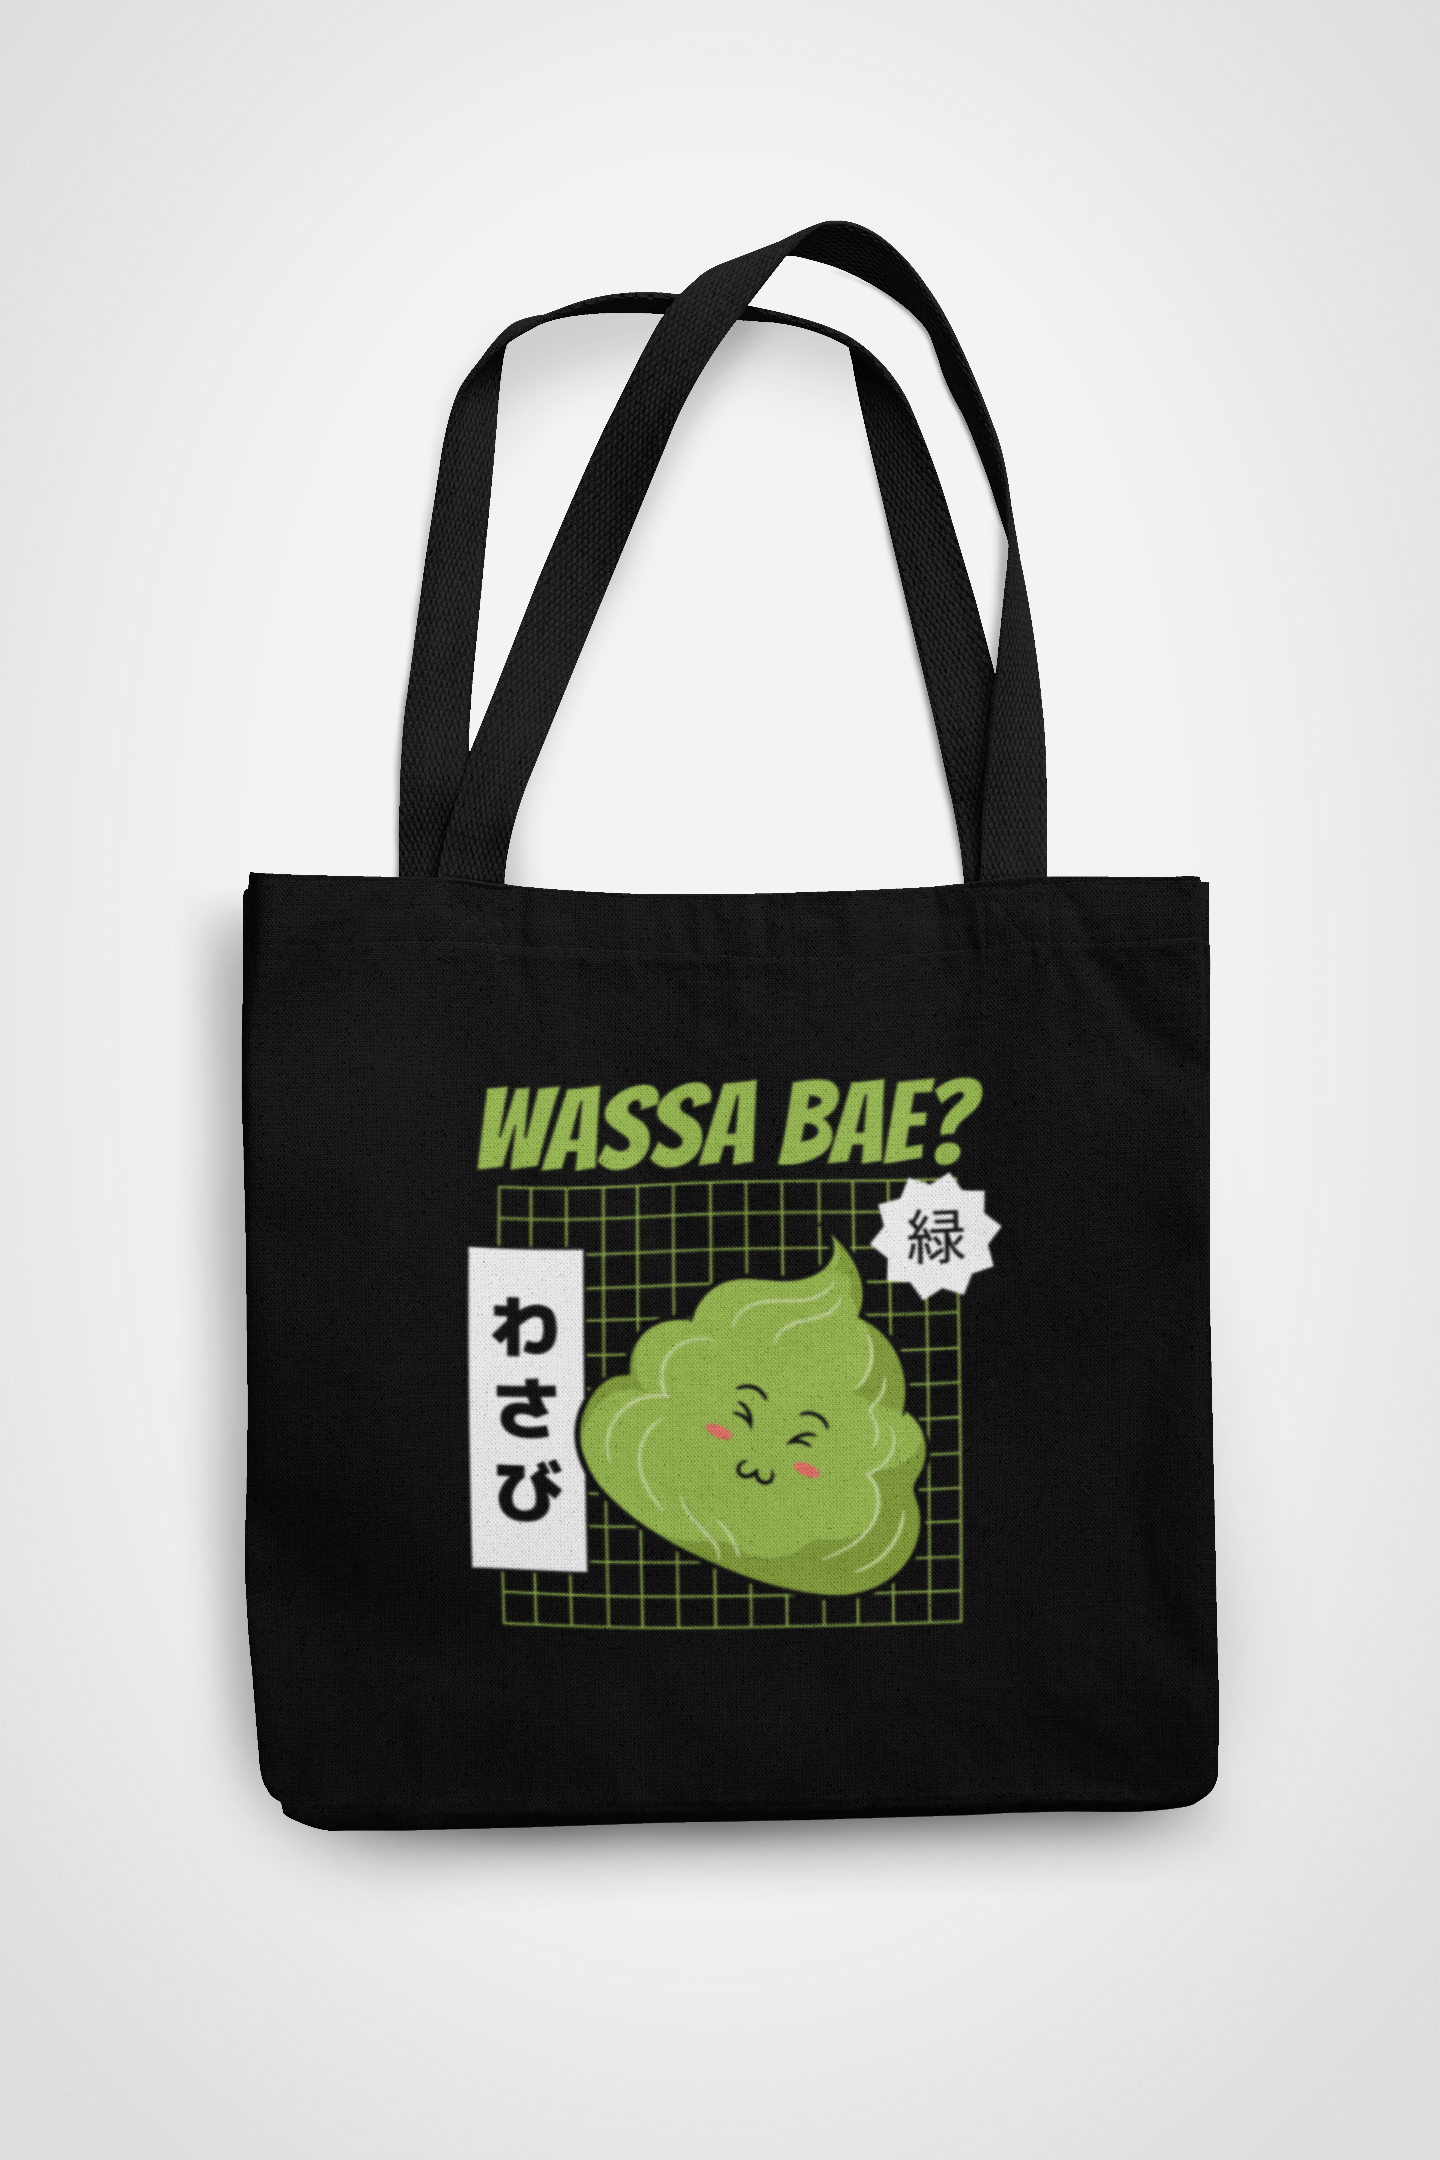 Zipped Tote Bag - Wassa bae